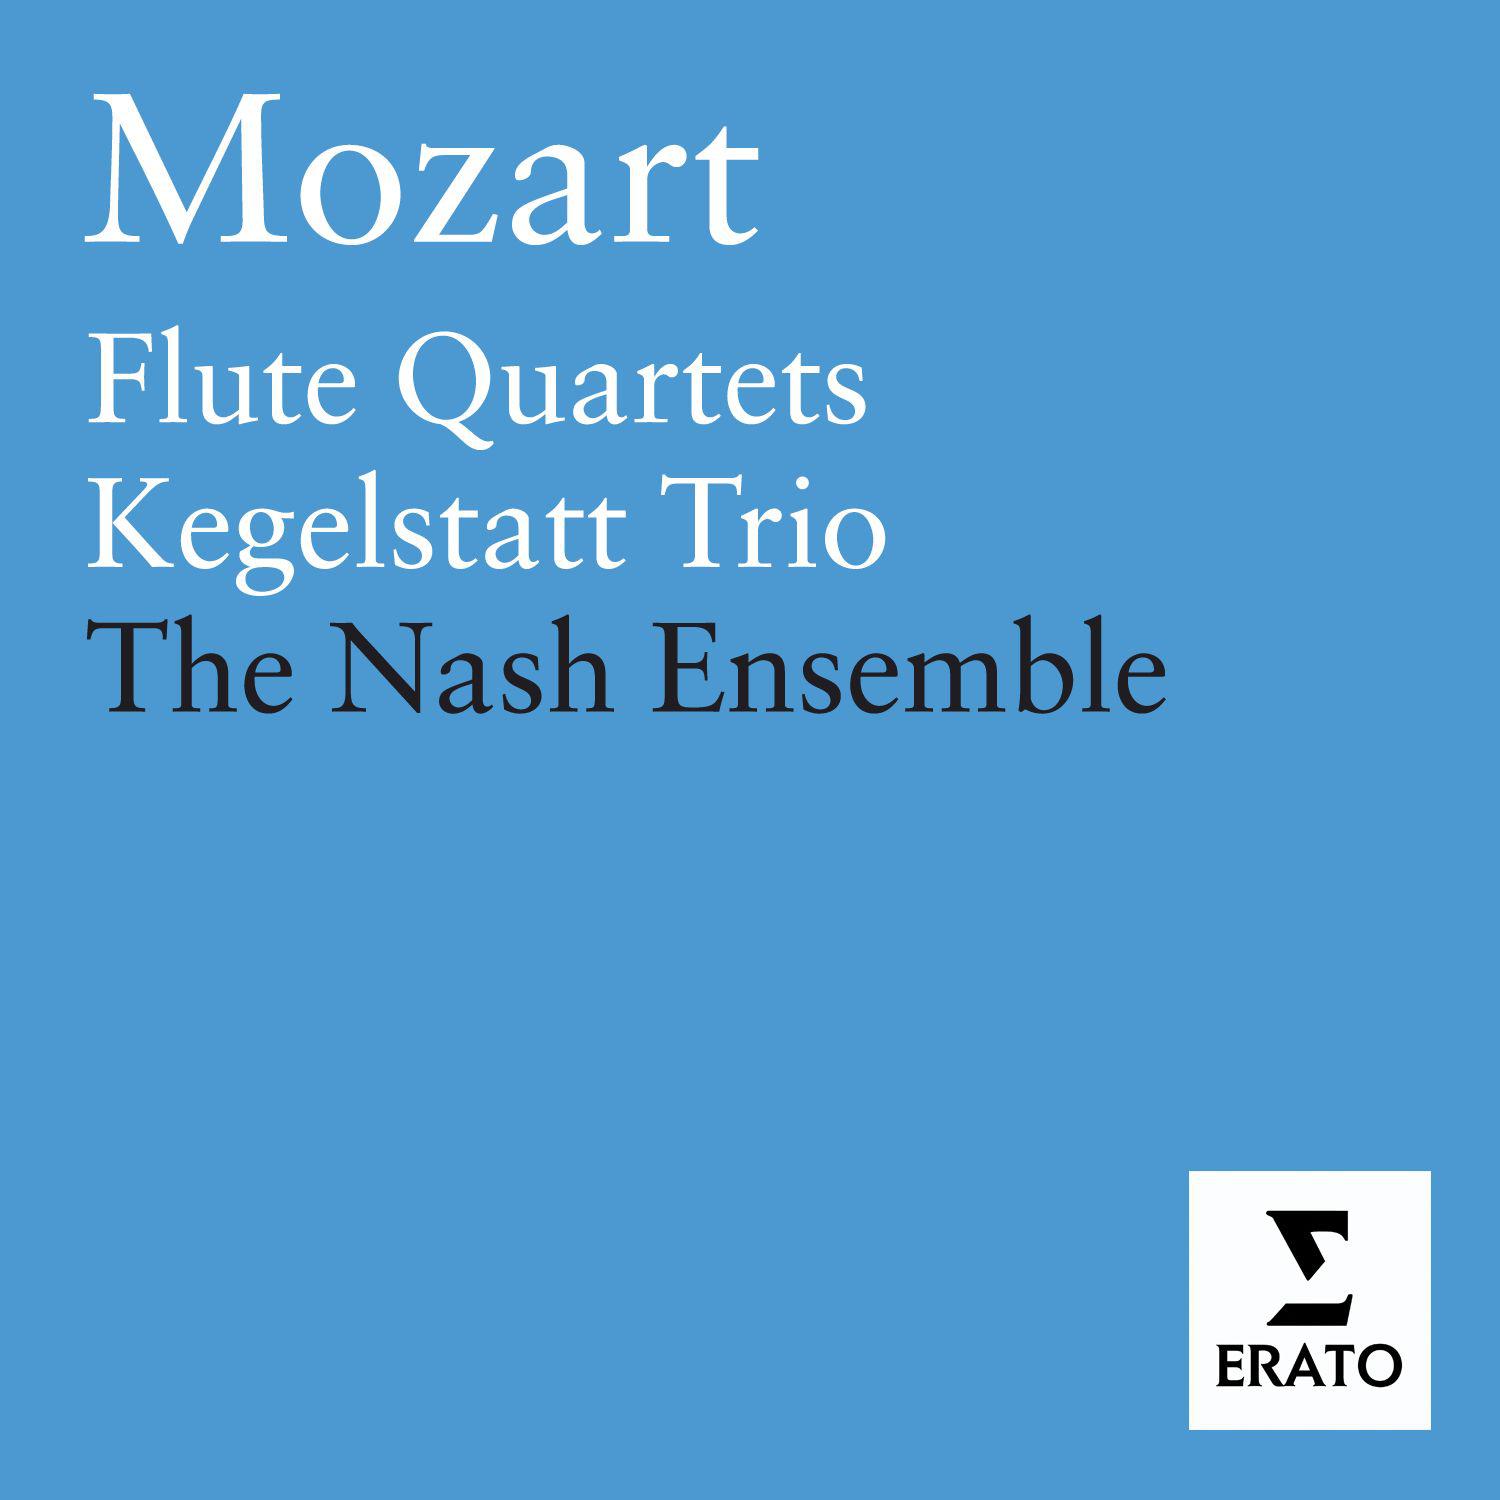 Flute Quartet No. 1 in D Major, K. 285: I. Allegro